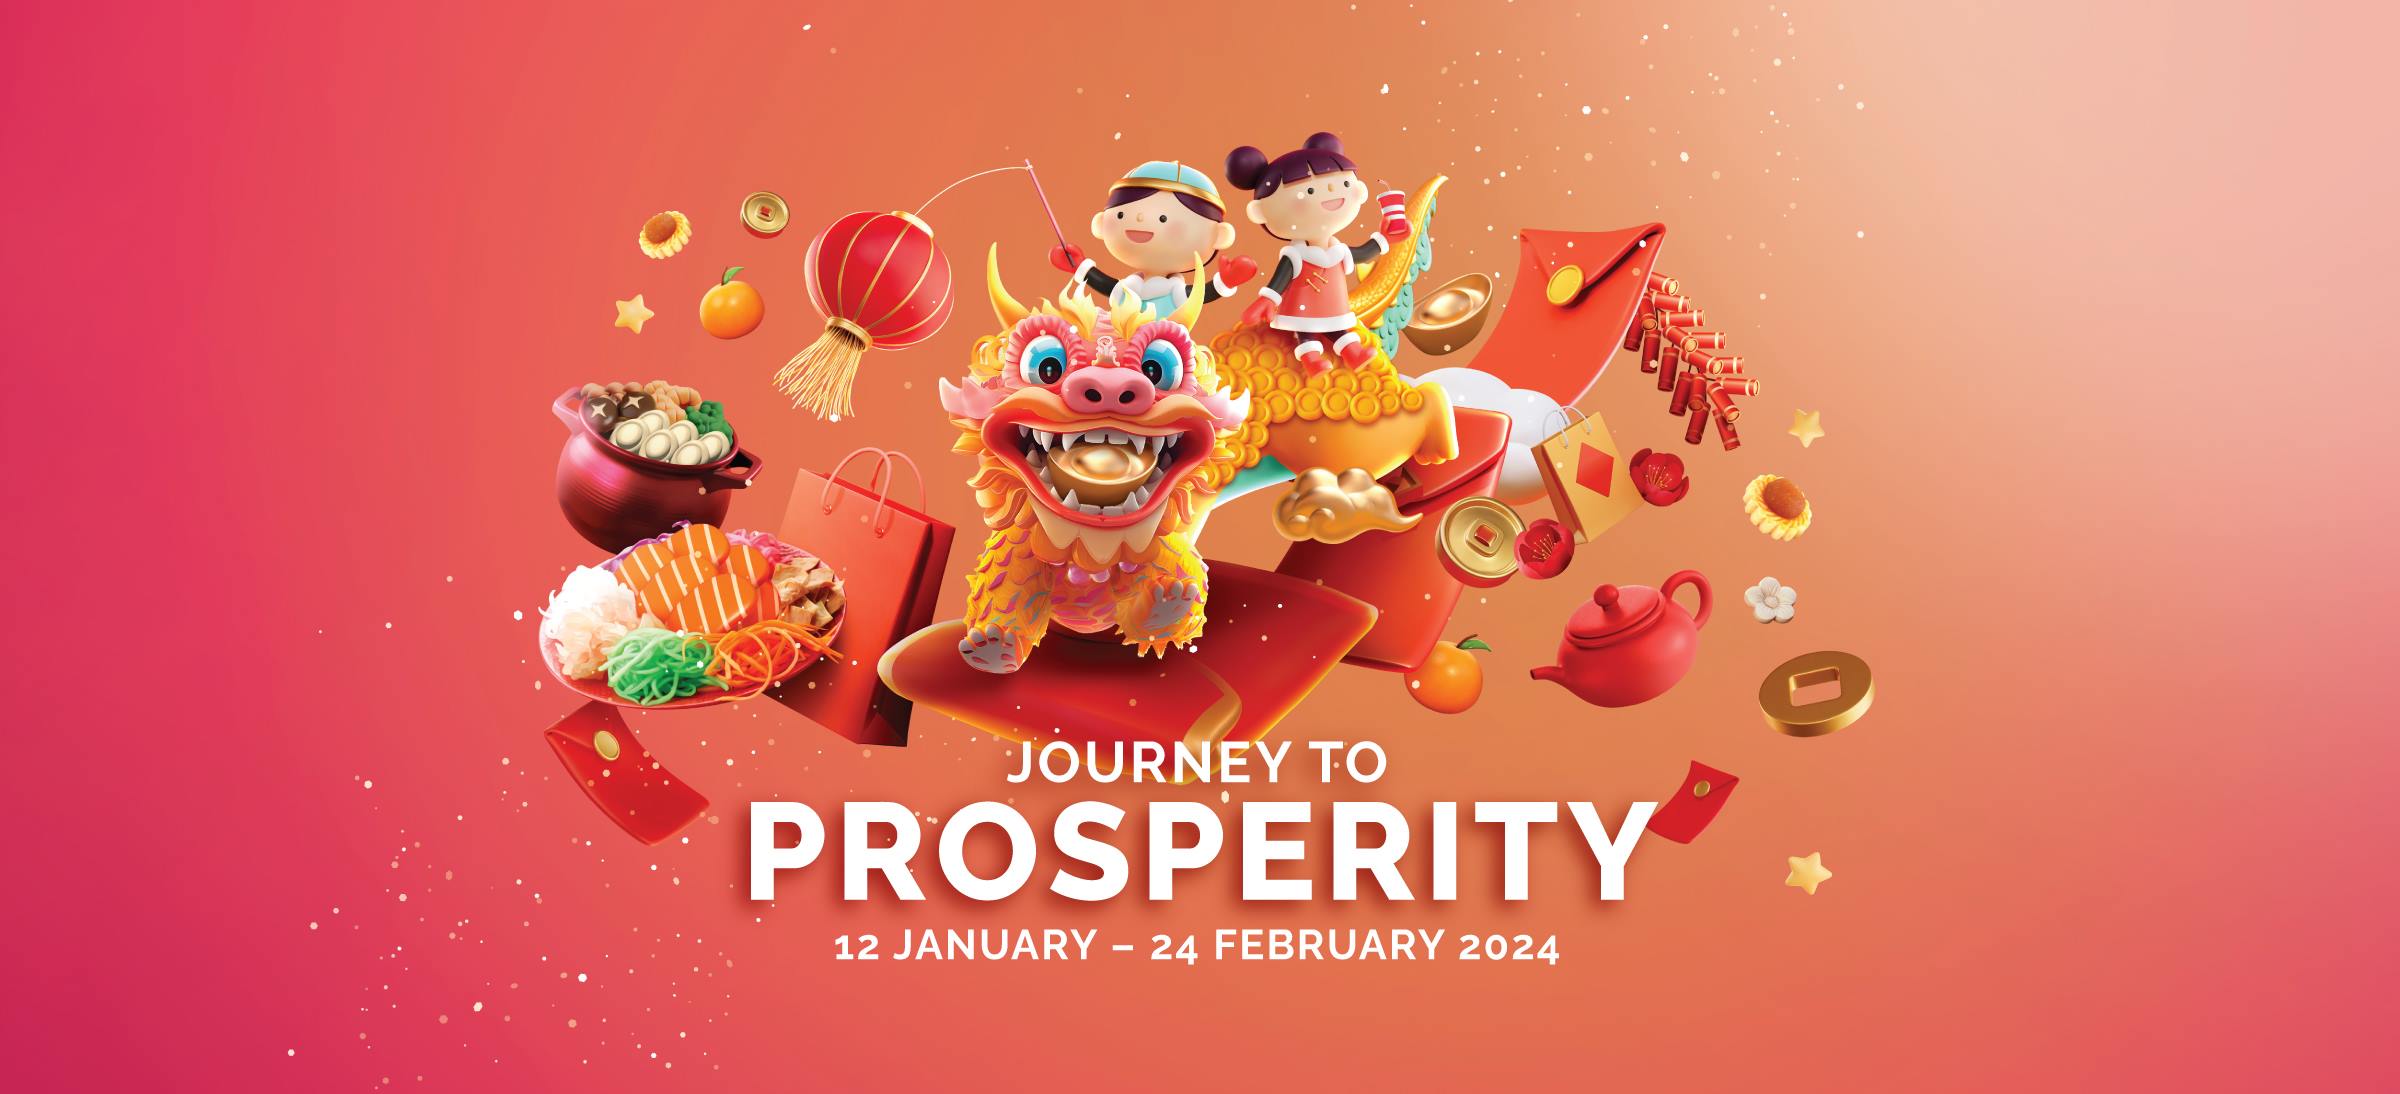 journey to prosperity